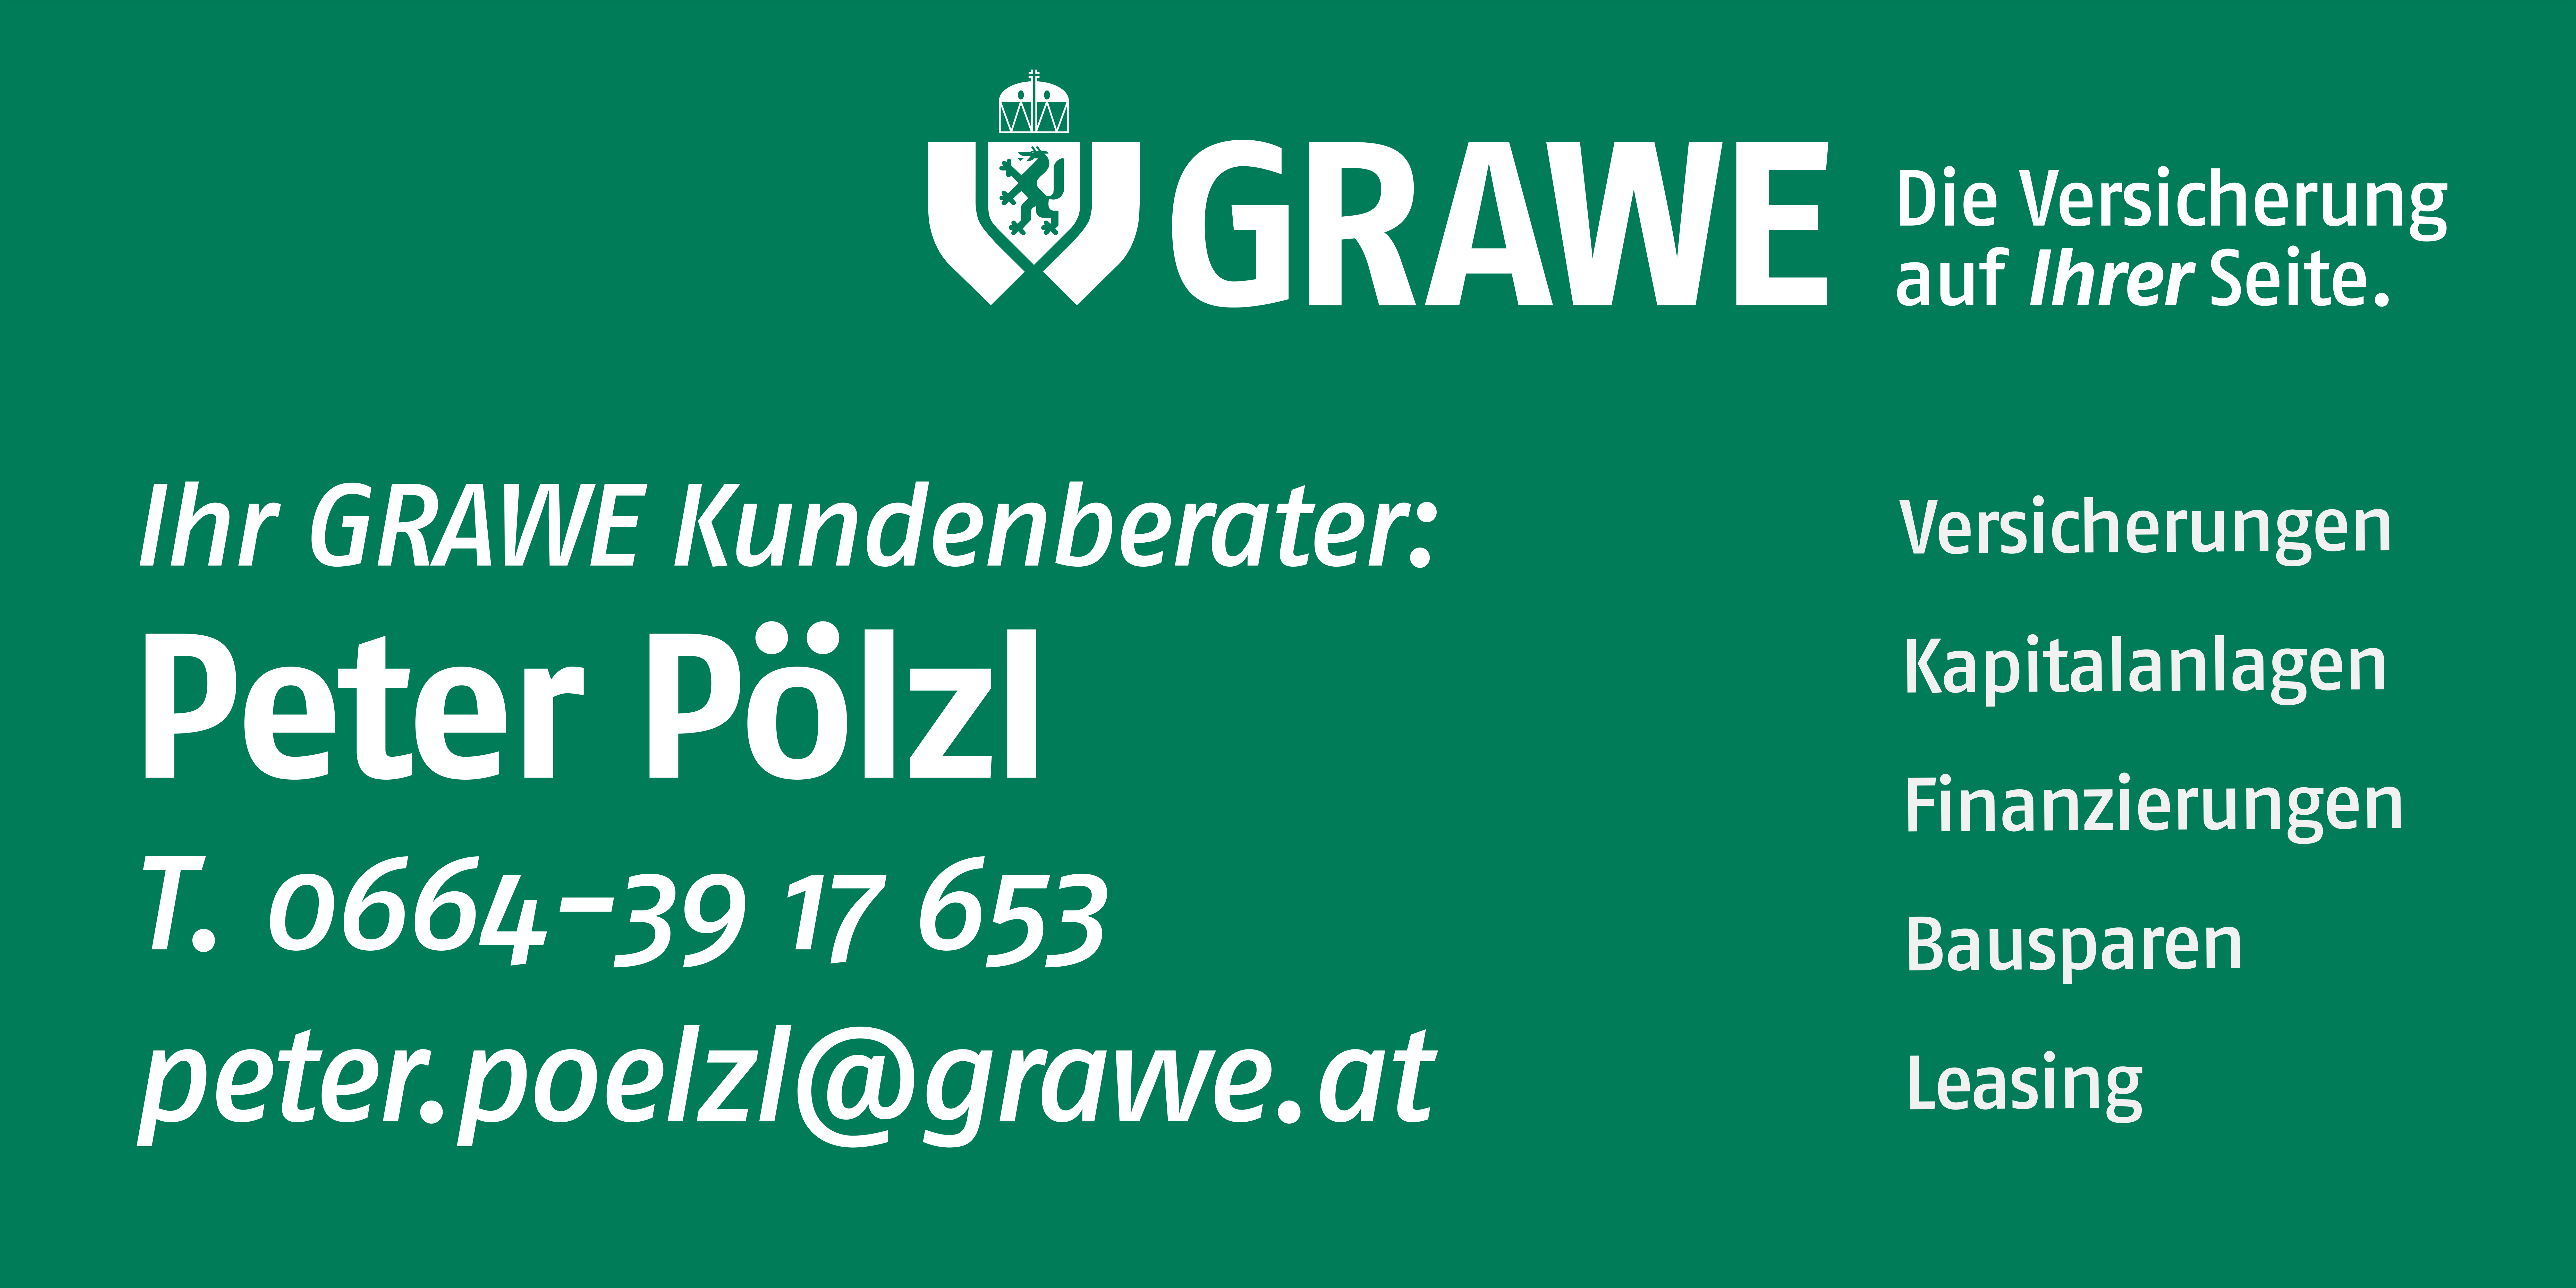 GRAWE Pölzl